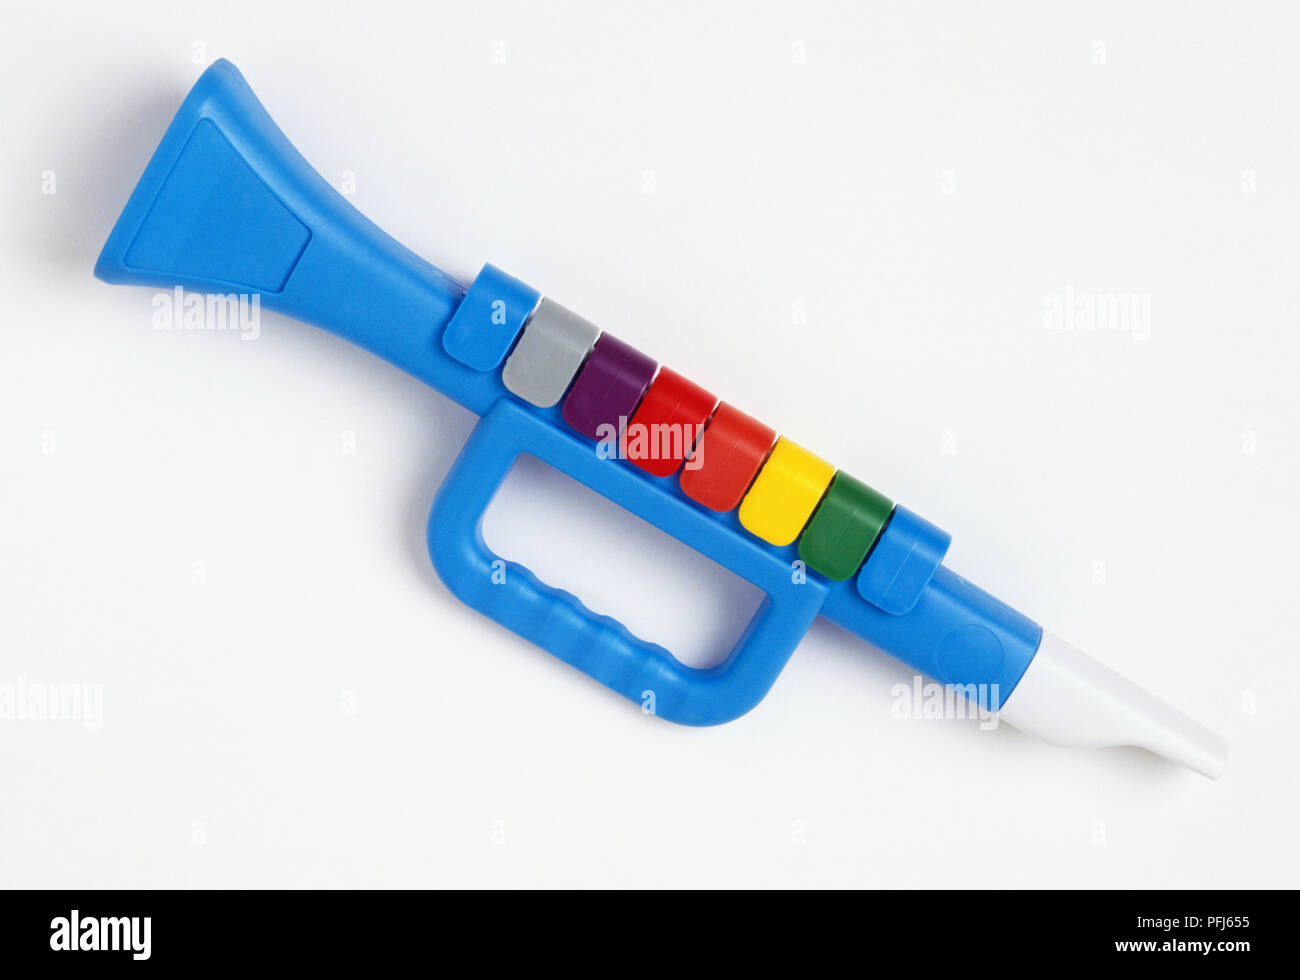 Plastic toy clarinet with multi-coloured keys Stock Photo